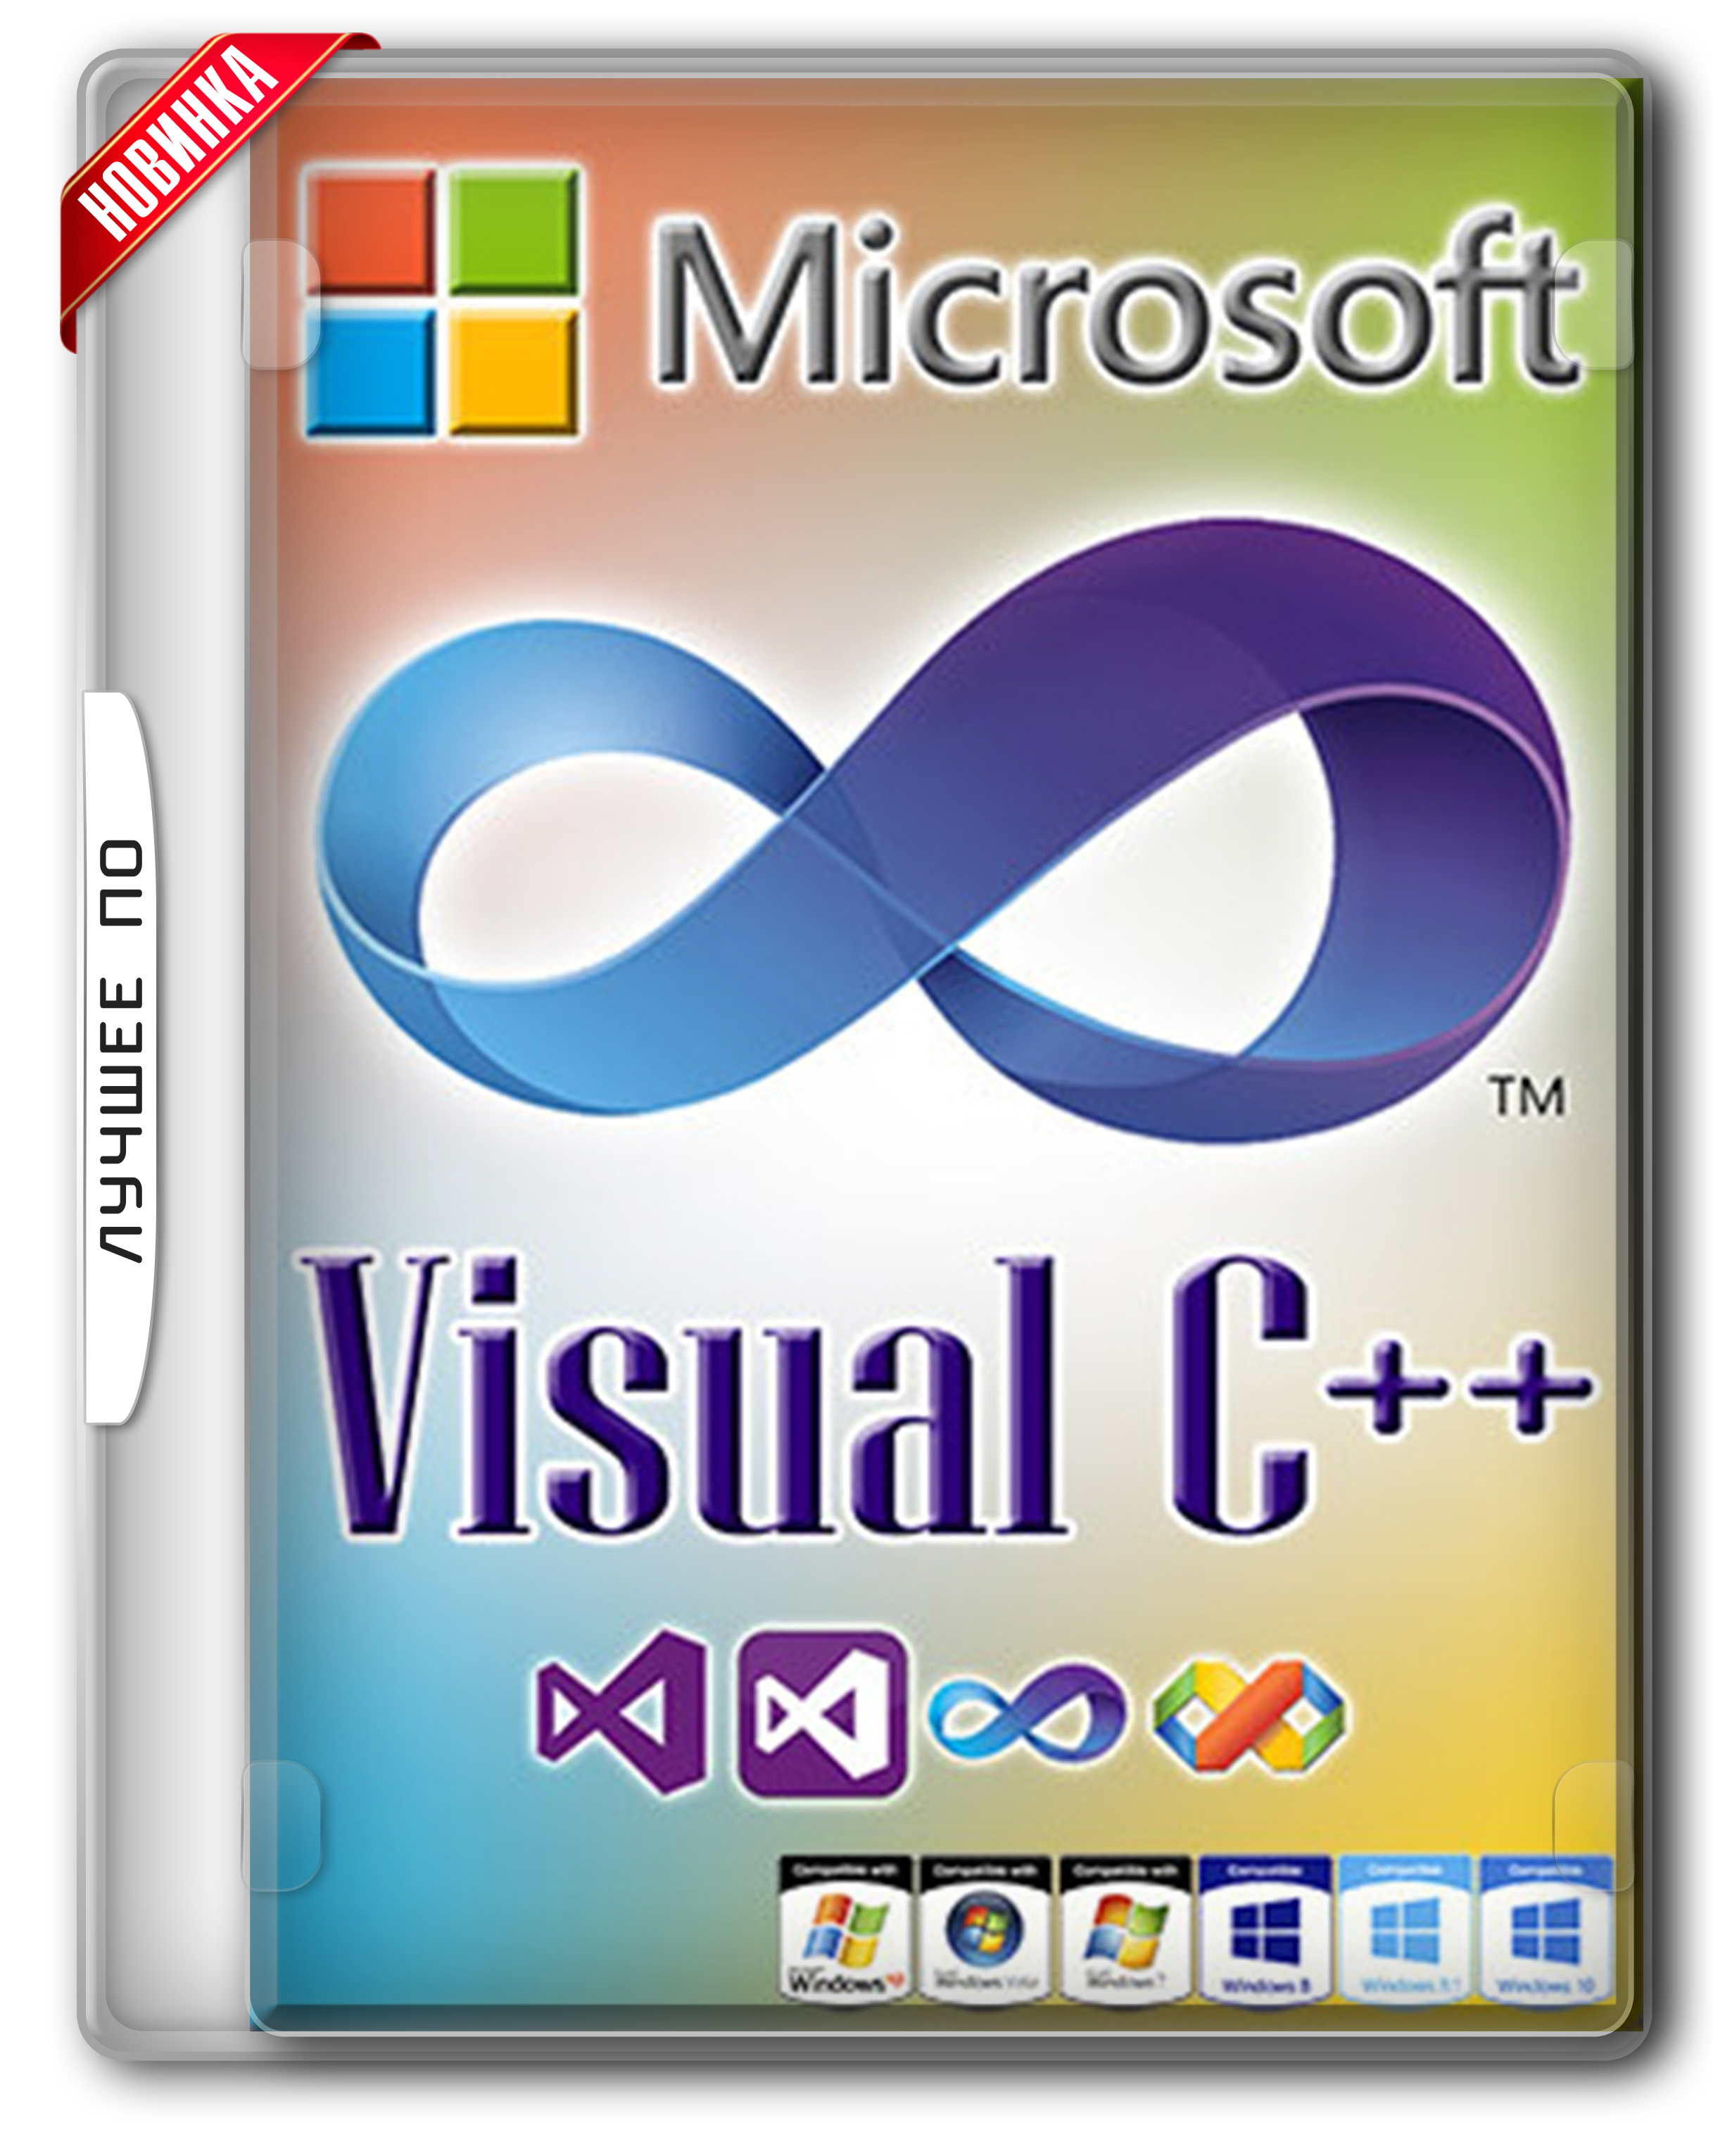 Microsoft visual c windows 10 x86. Microsoft Visual c++. Microsoft Visual c++ Redistributable. Microsoft Visual c++ 2005. Microsoft Visual c++ Redistributable 2019.